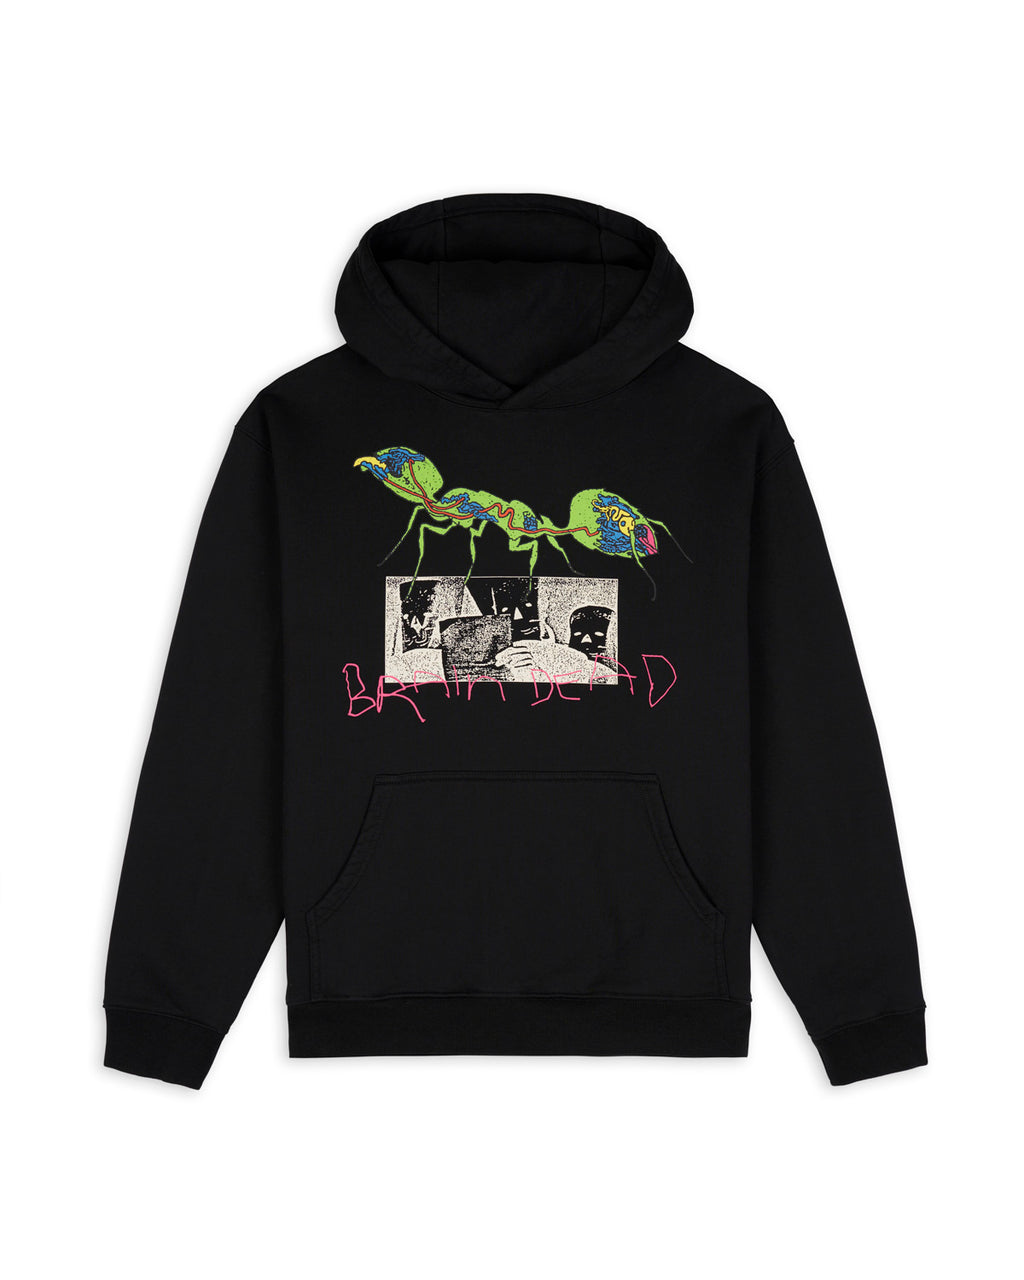 Ant War Hooded Sweatshirt - Black